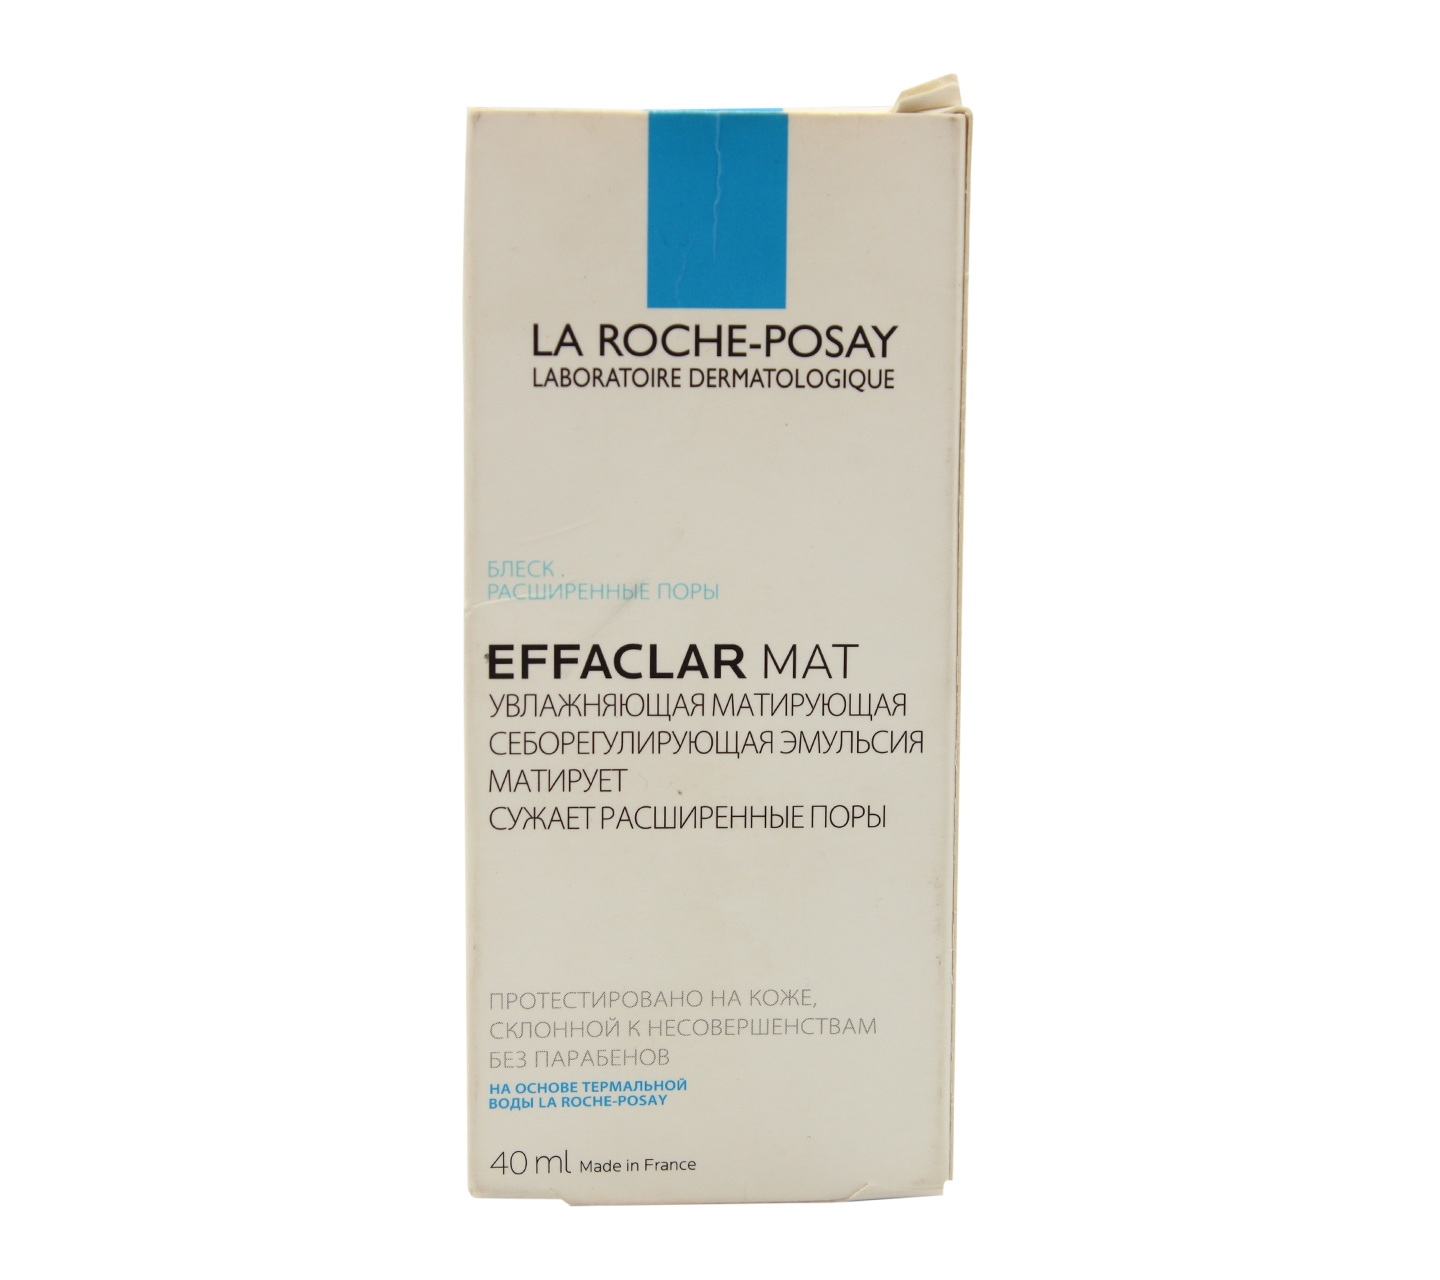 La Roche Posay Effaclar Mat Skin Care